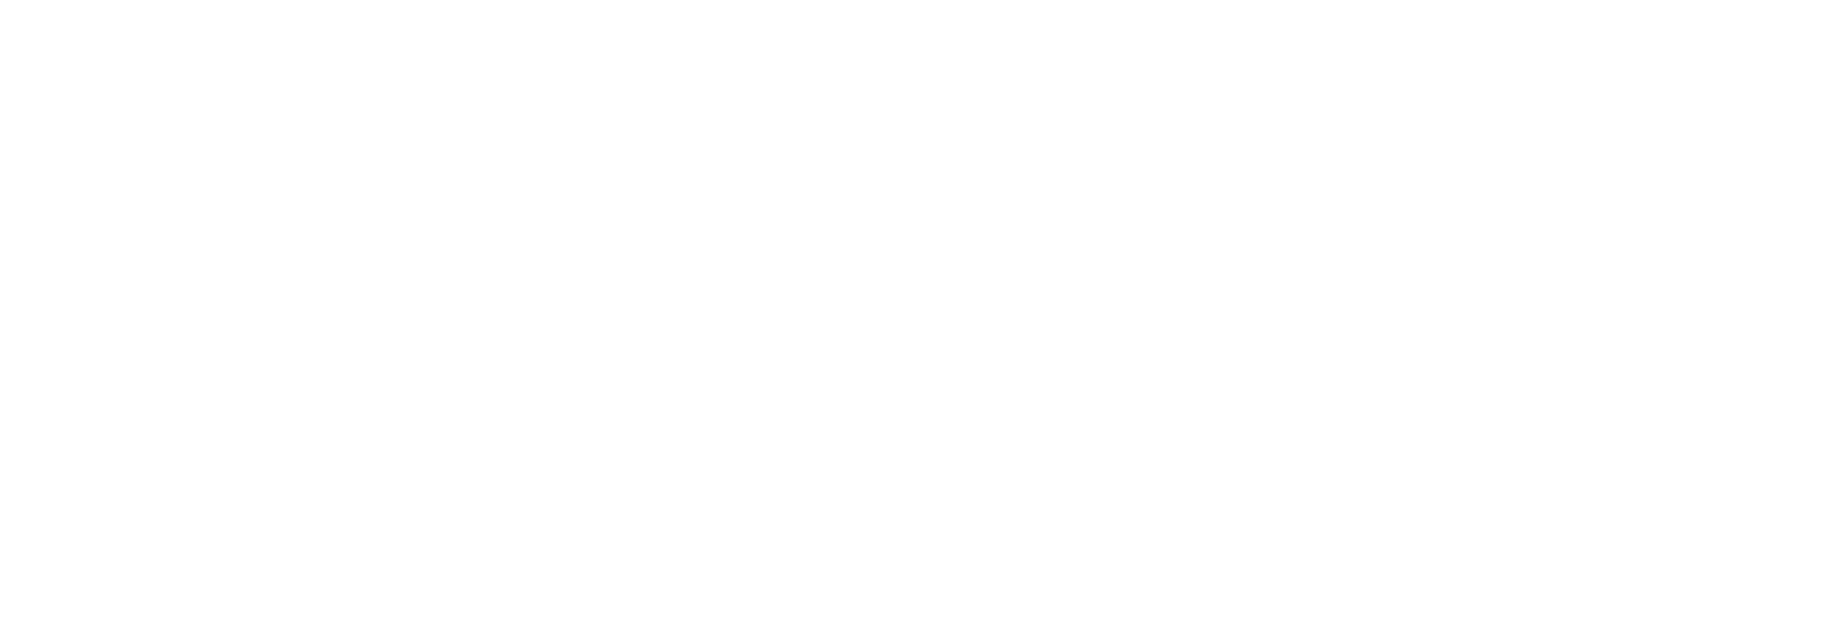 TDS Fiber Internet is Better Internet